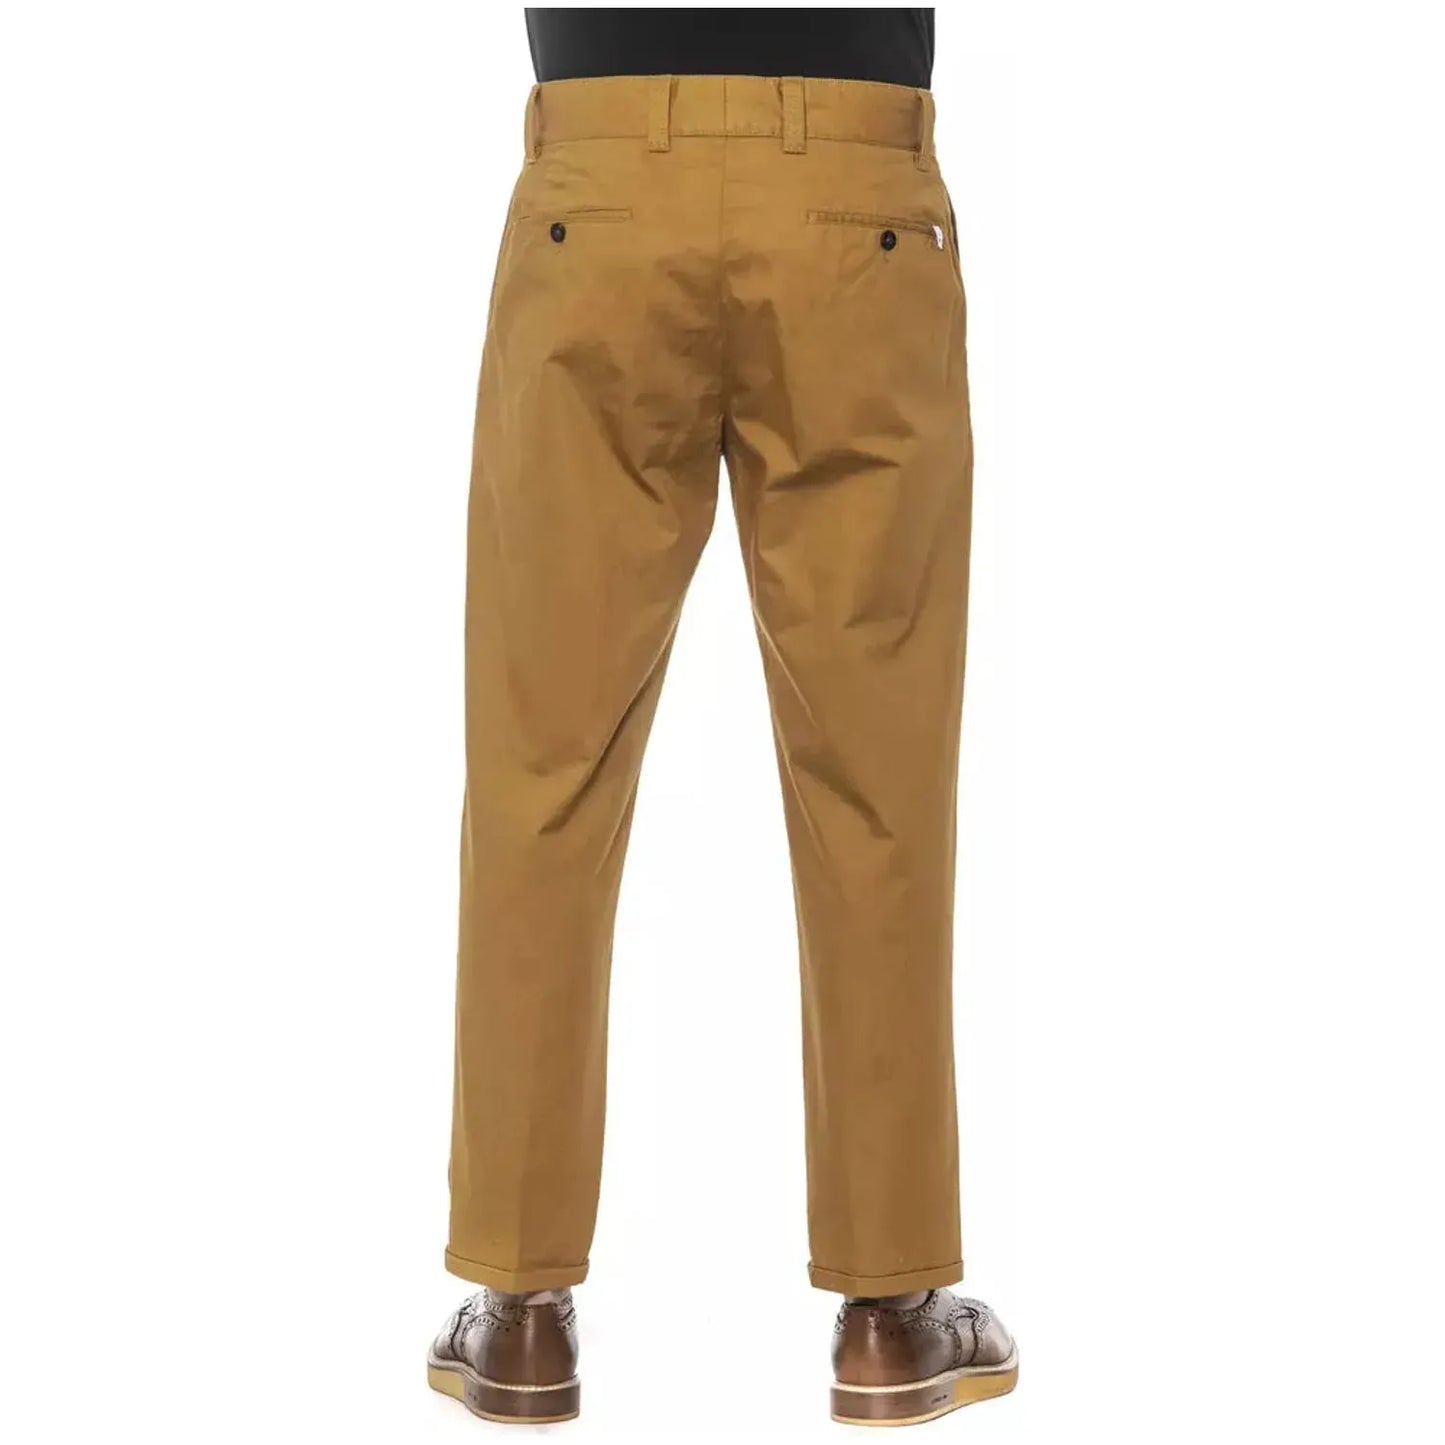 PT Torino Elegant Cotton Pleated Men's Trousers brown-cotton-jeans-pant-5